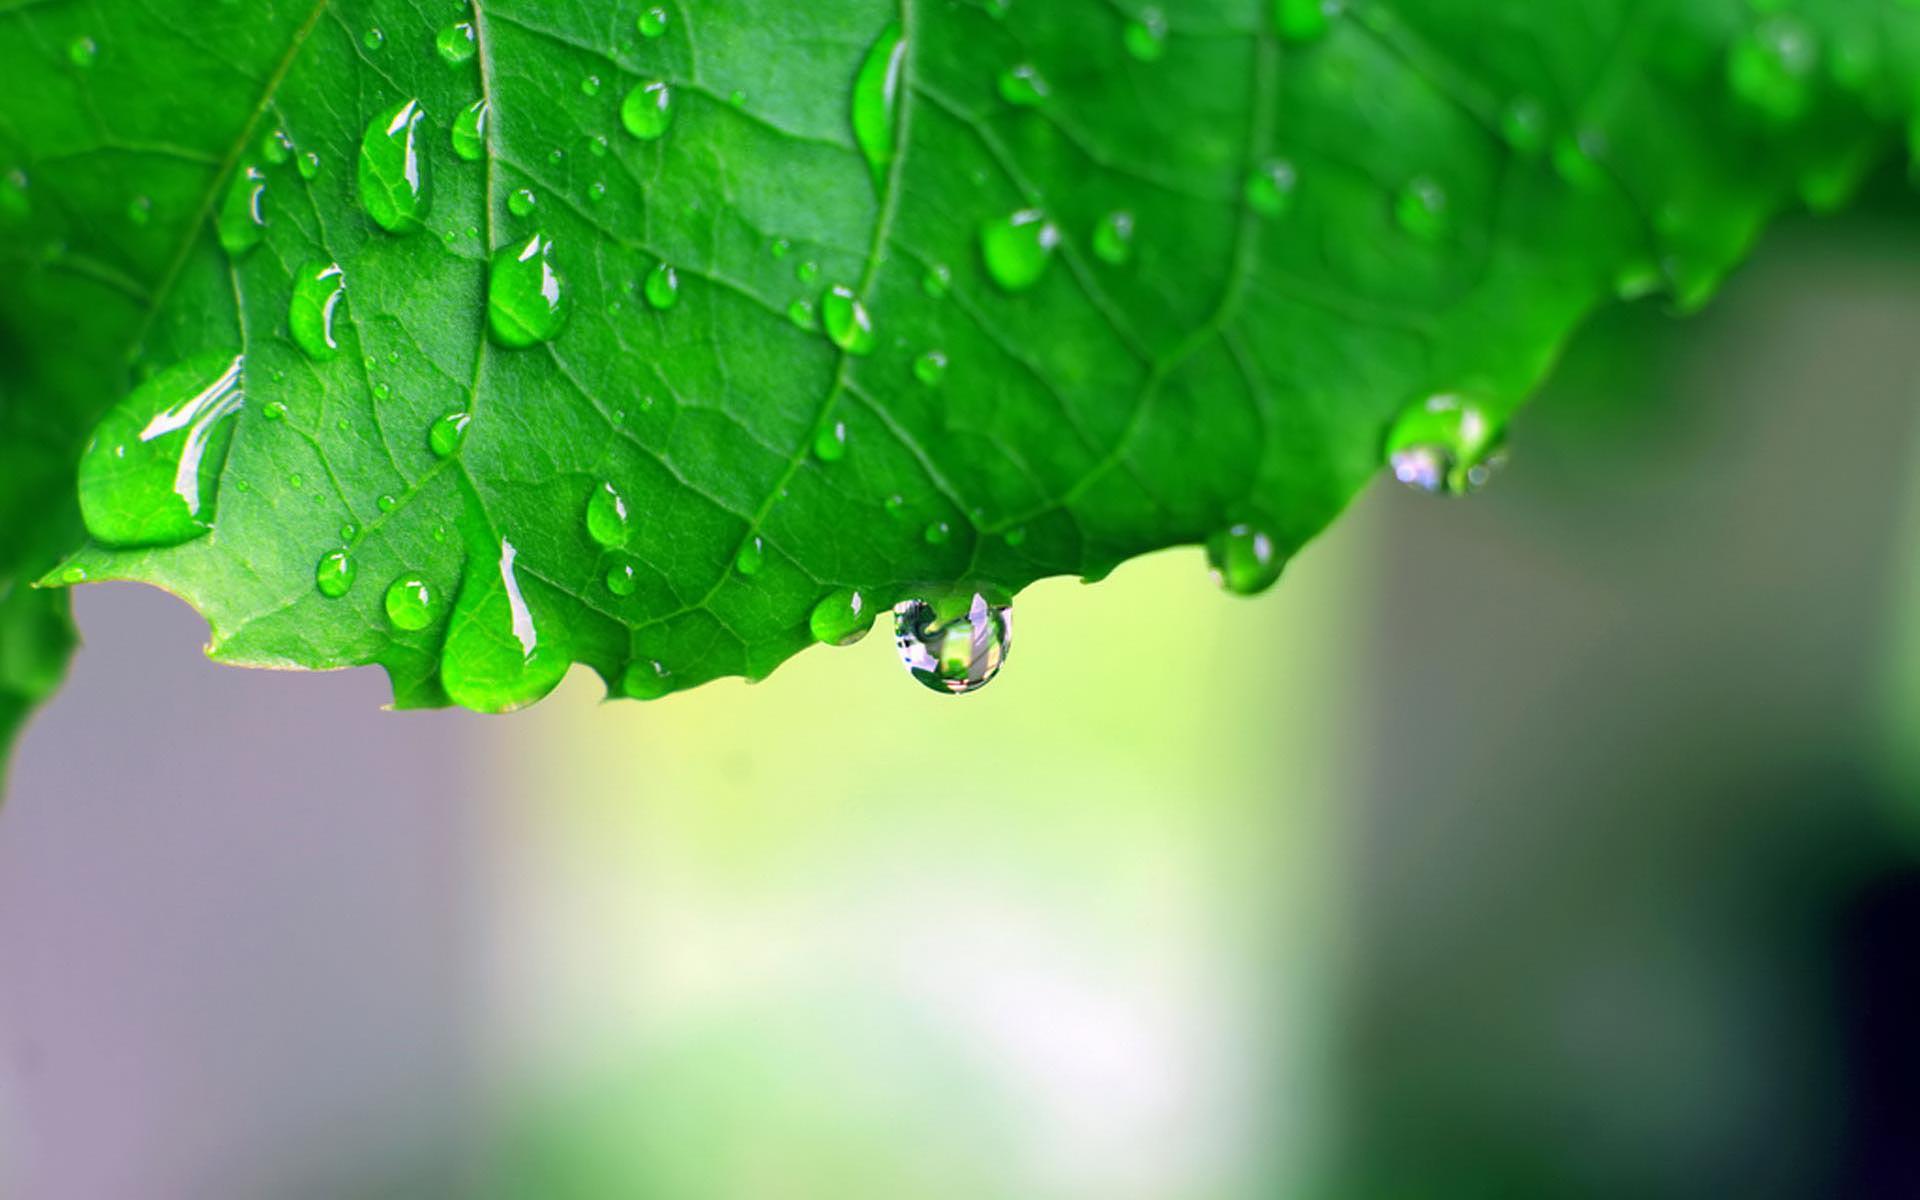 monsoon wallpaper,green,leaf,water,nature,dew